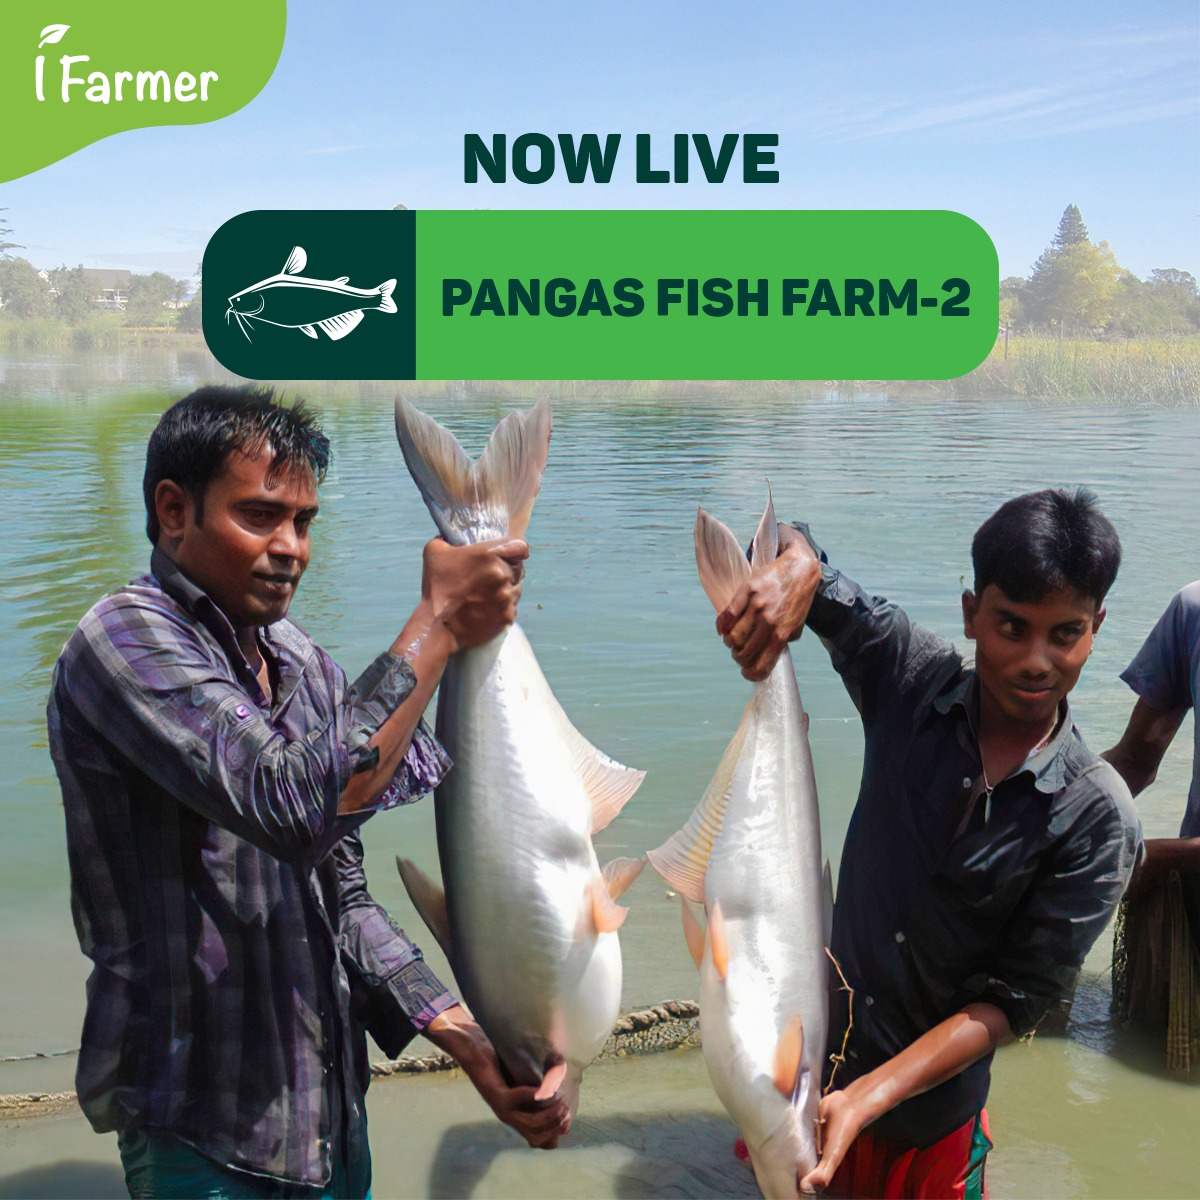 Pangas Fish Farm-2